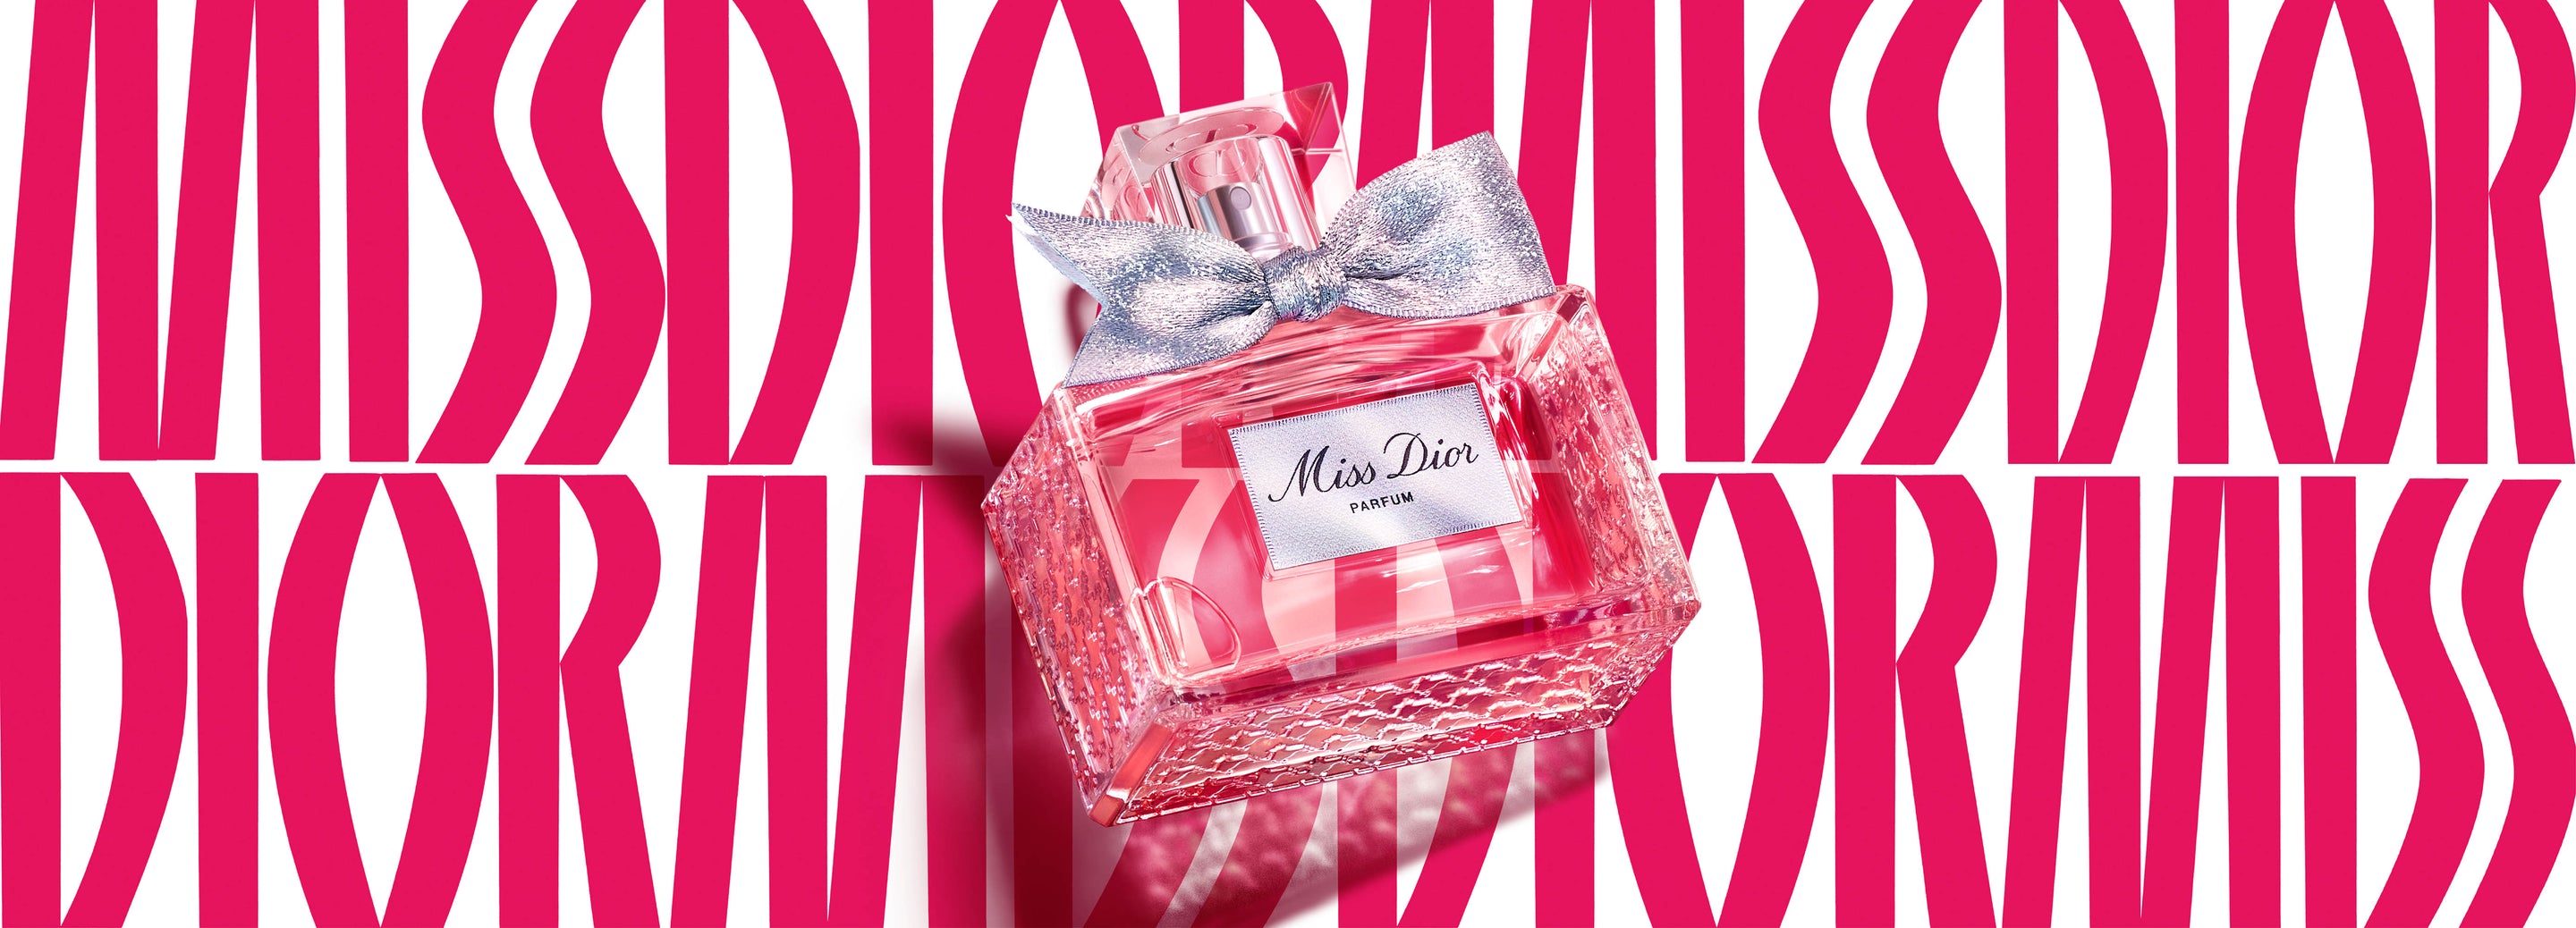 於Miss Dior標誌性背景下的Miss Dior香精照片 